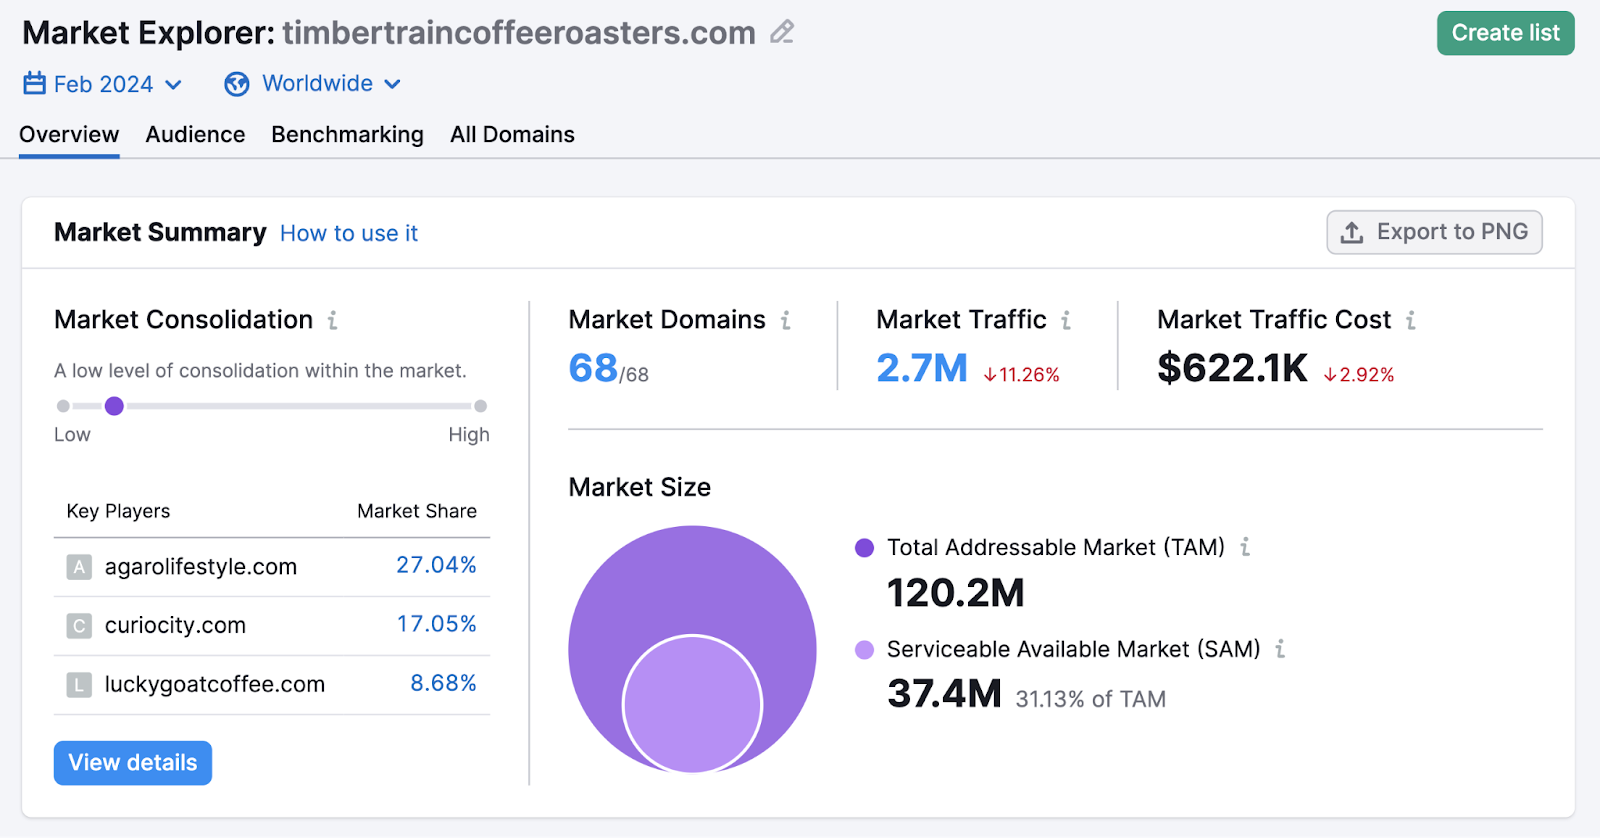 market consolidation, market domains, market traffic, market traffic cost, and market size data shown in Market Explorer tool